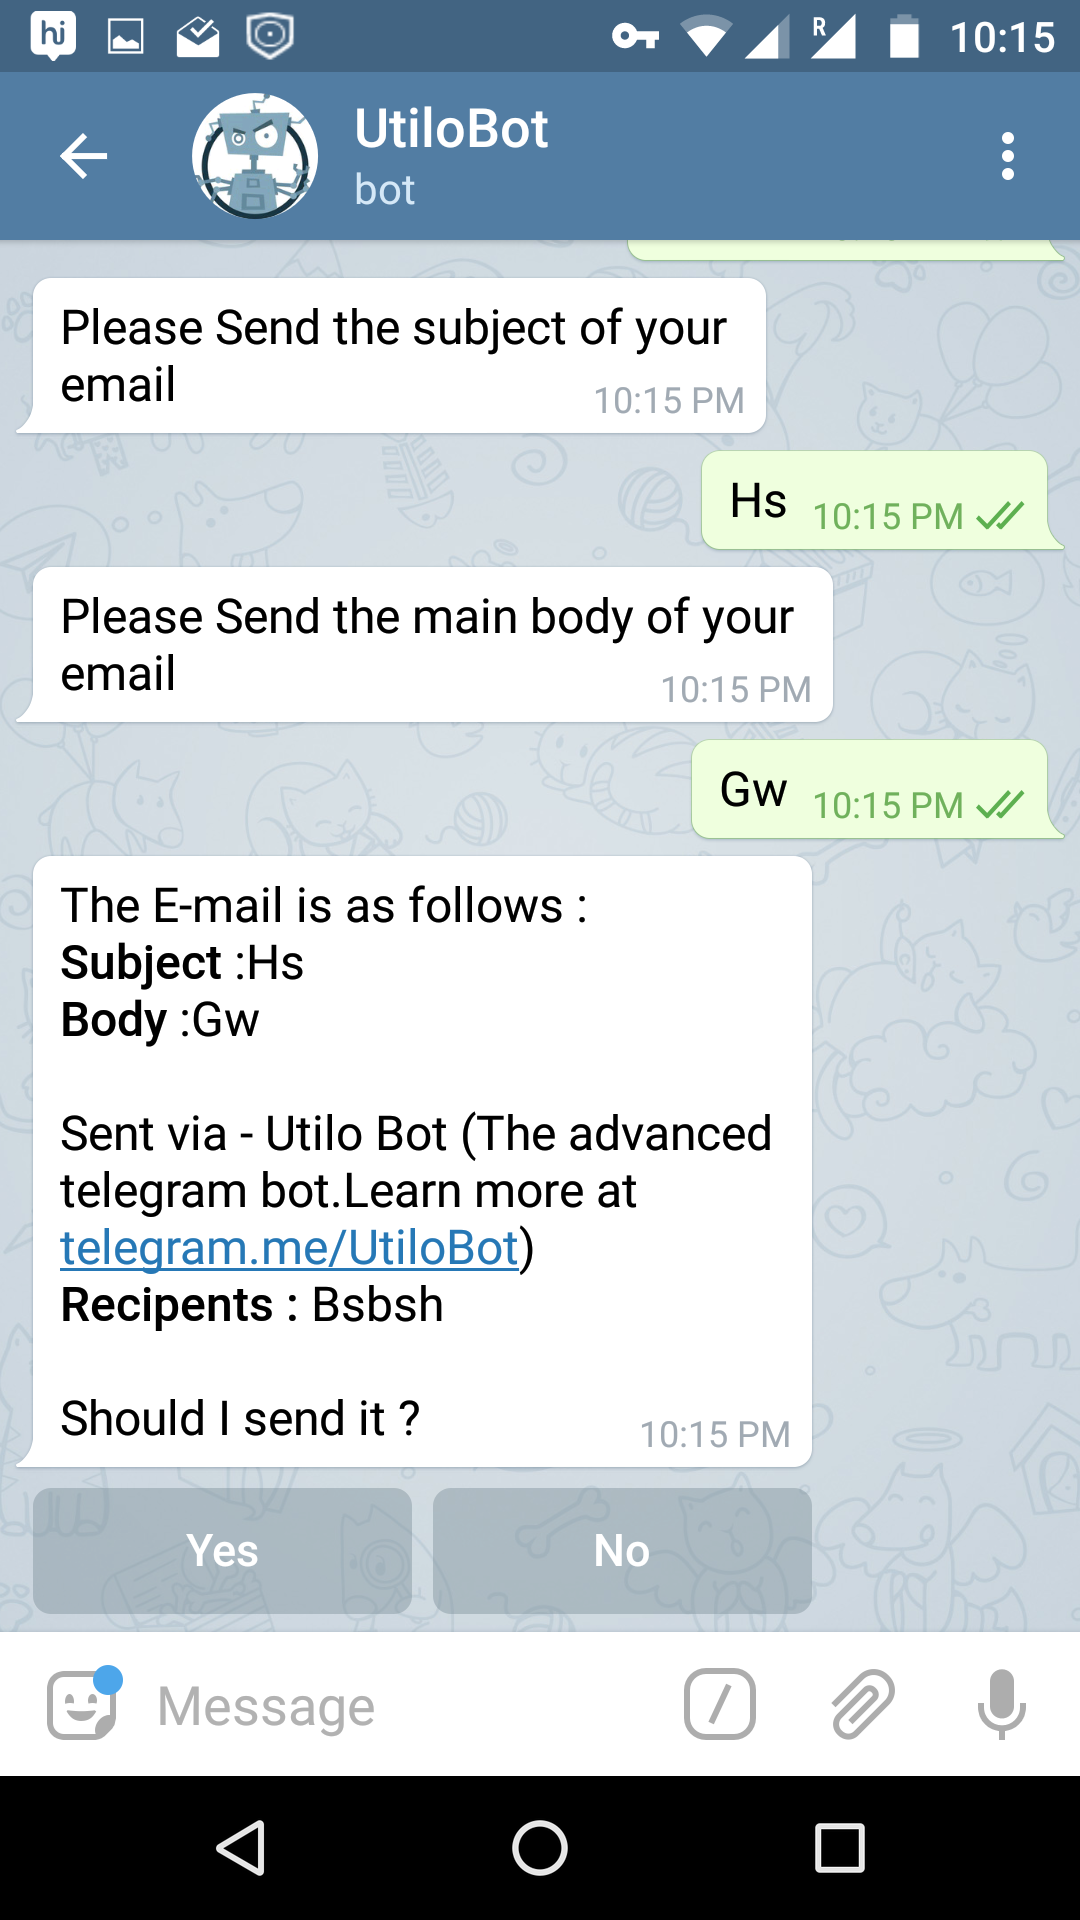 Utilobot - Send mail